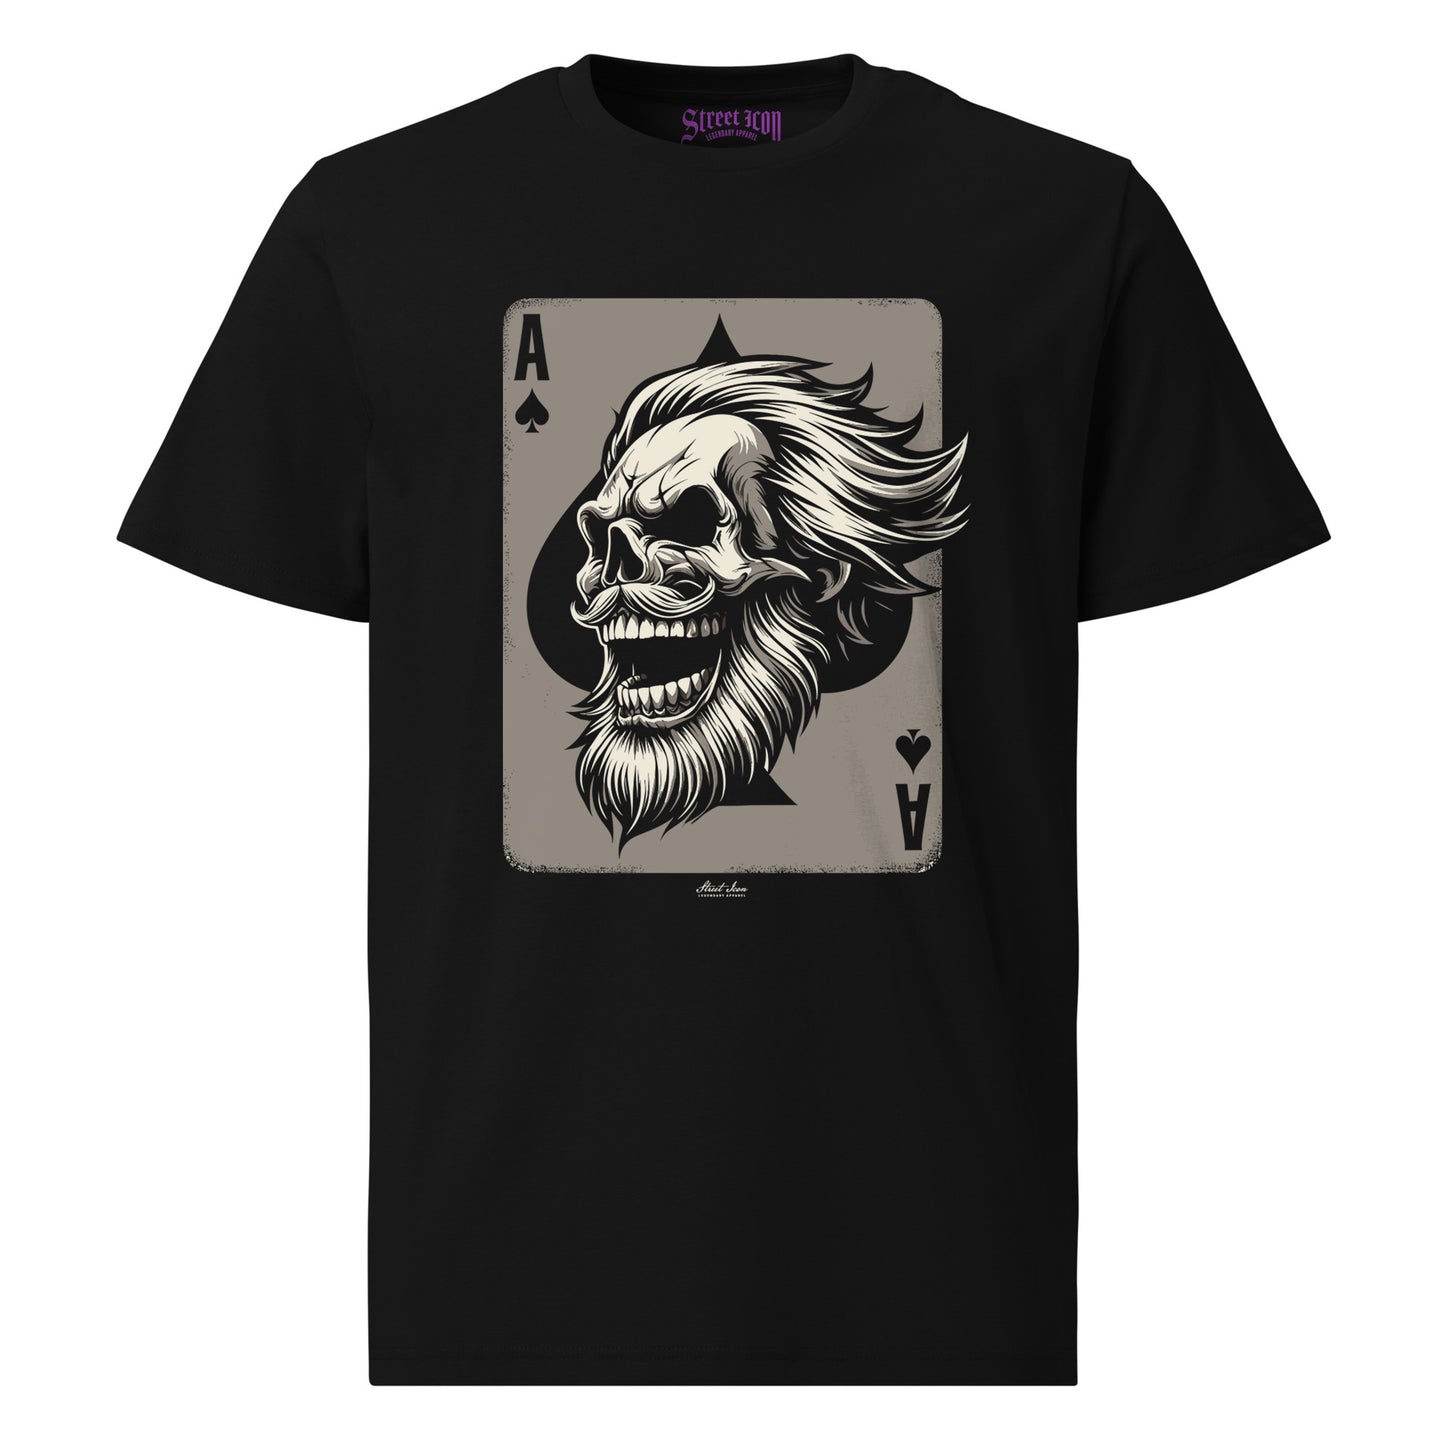 Joker playing card t-shirt